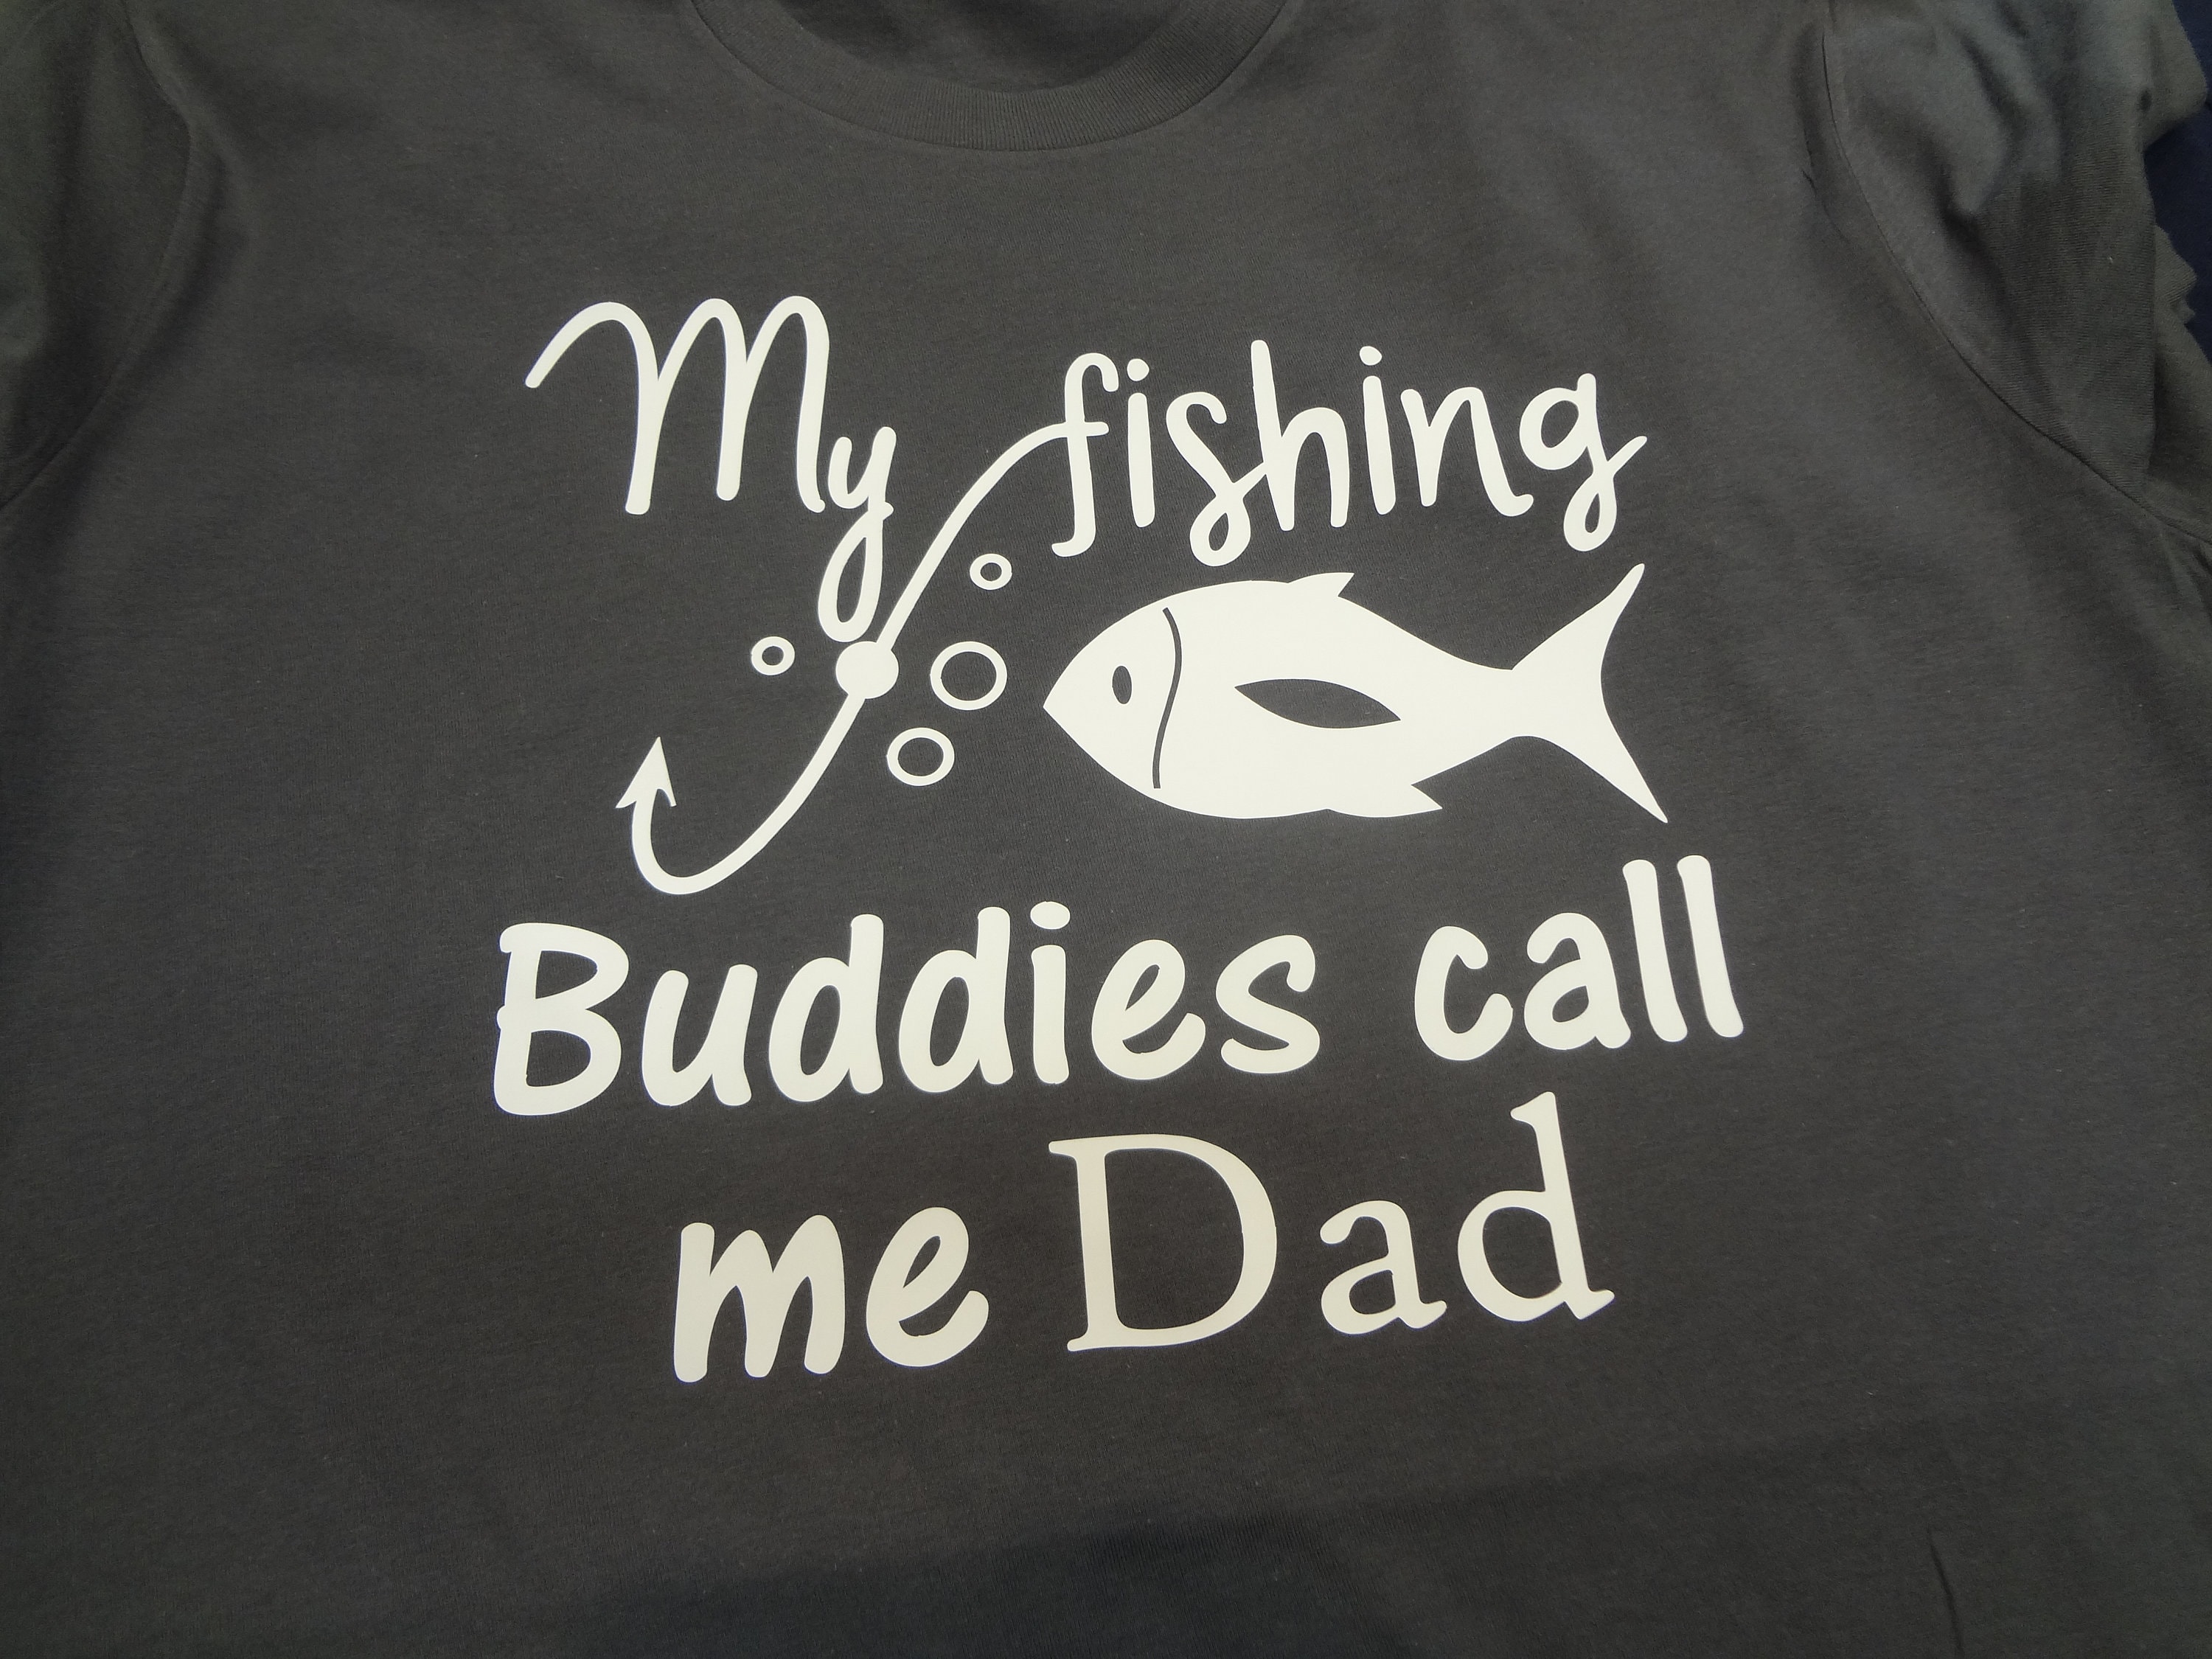 My favorite fishing buddy calls me dad